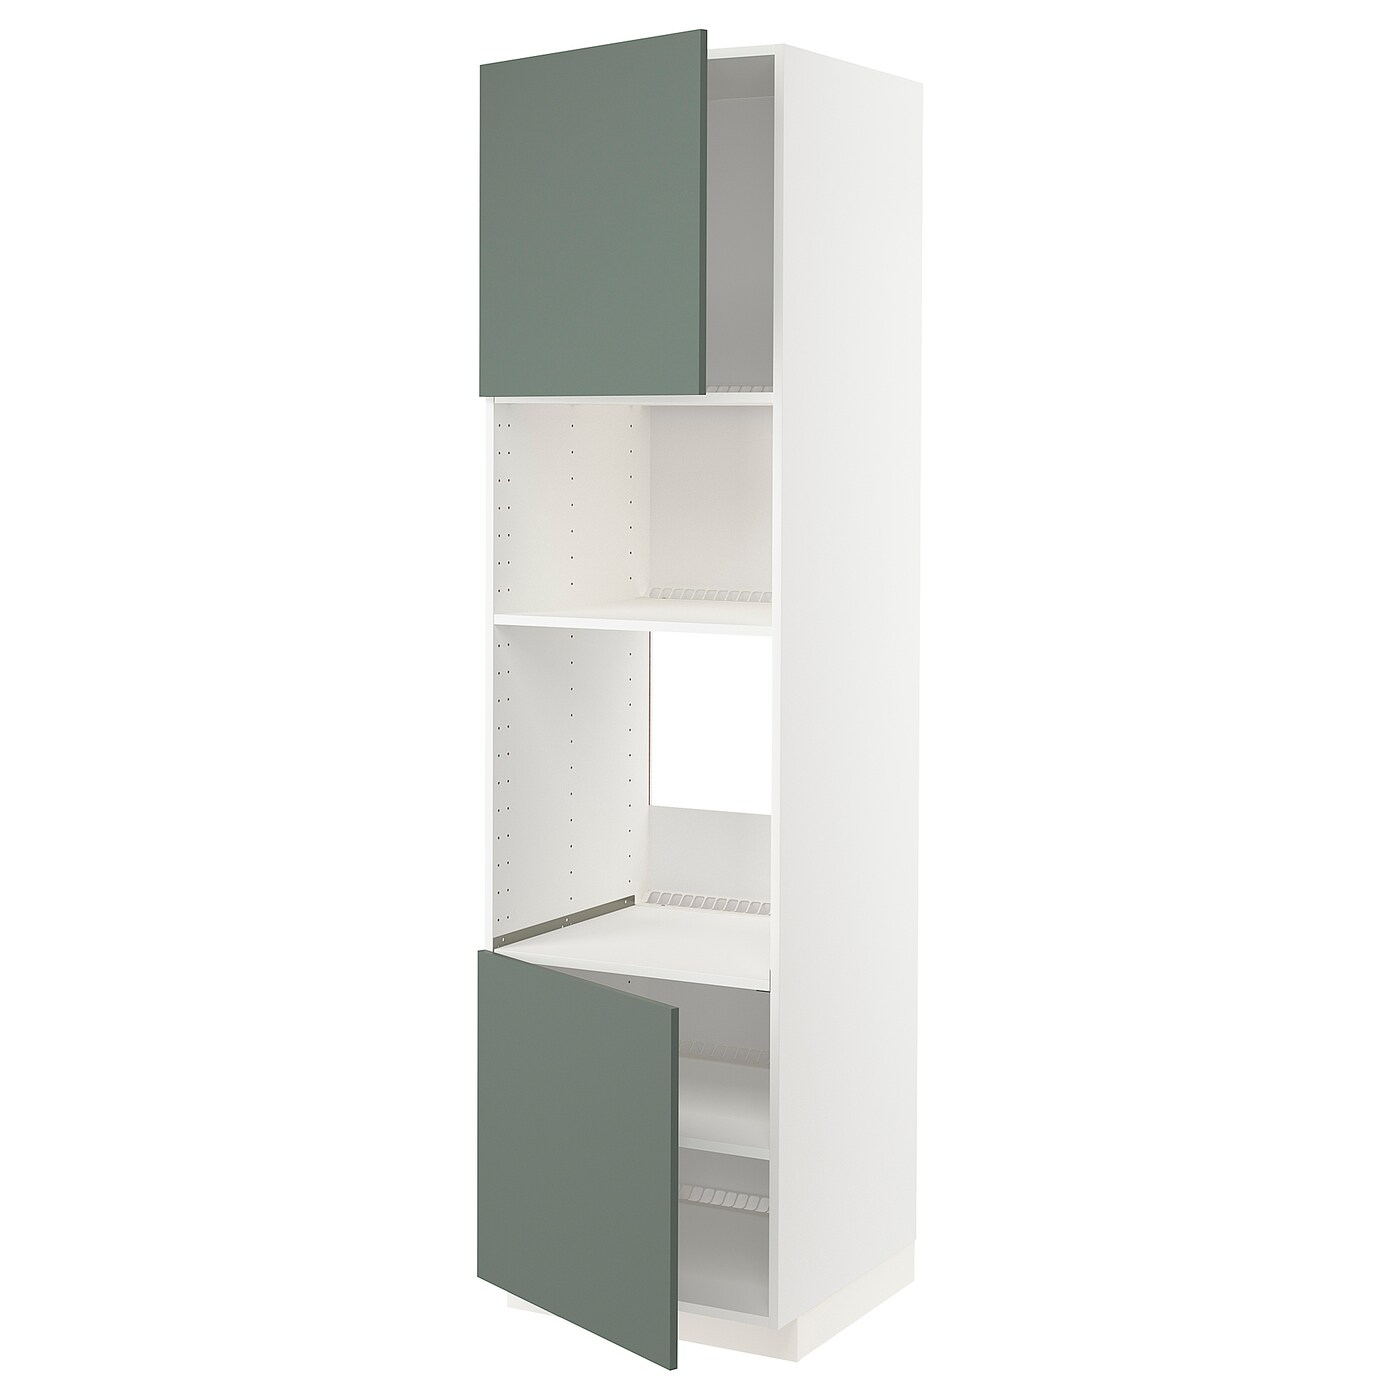 Модульный шкаф - METOD IKEA/ МЕТОД ИКЕА, 228х60 см, белый/зеленый